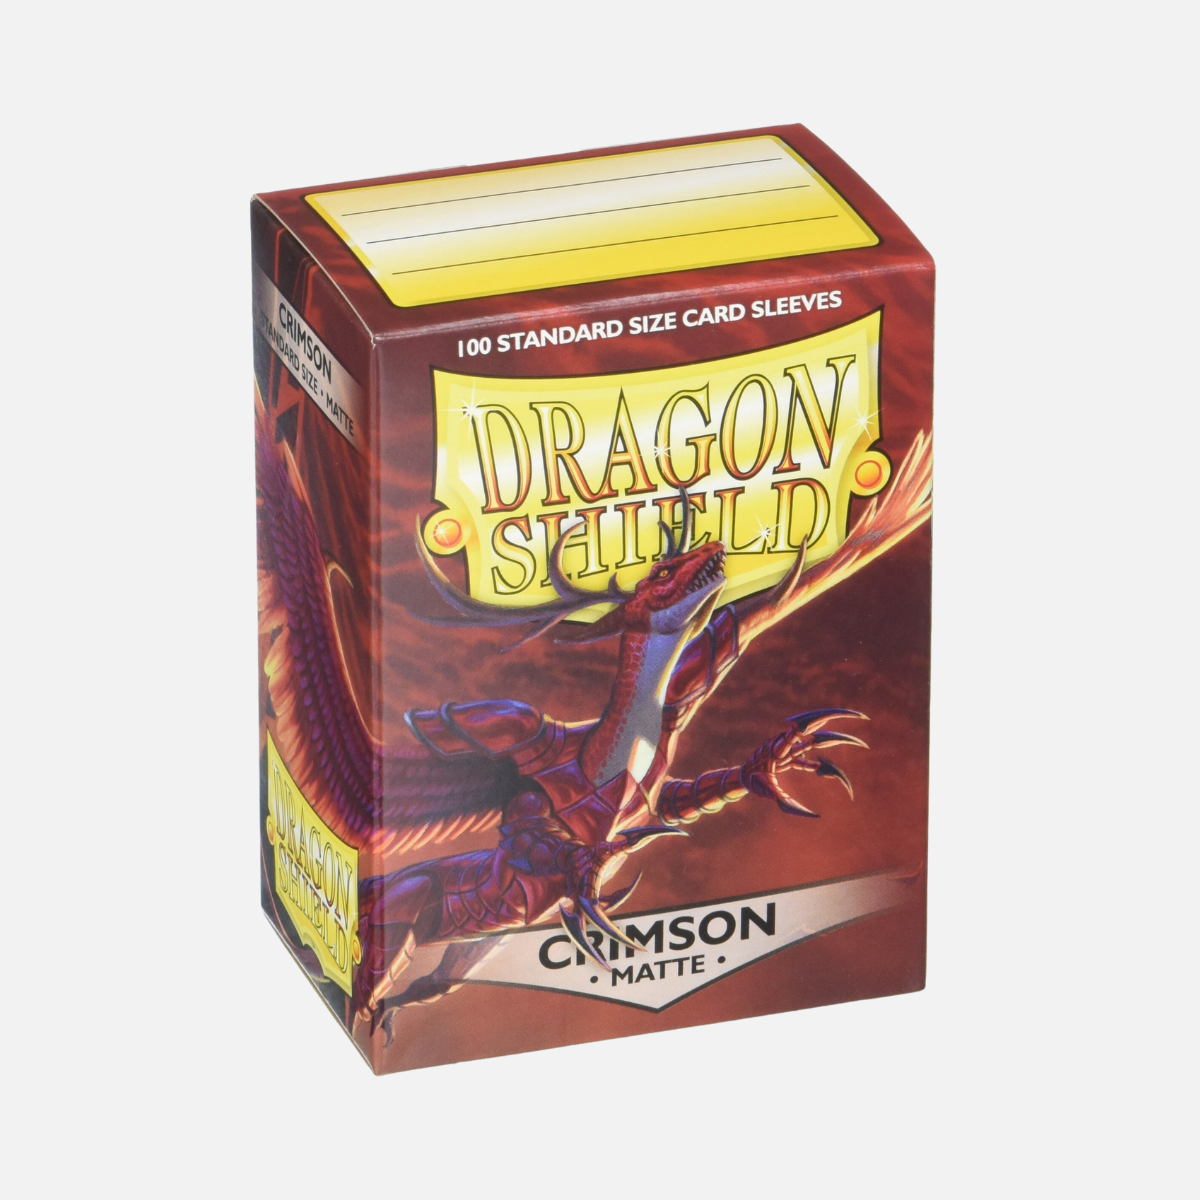 Dragon Shield card sleeves box of 100 crimson matte